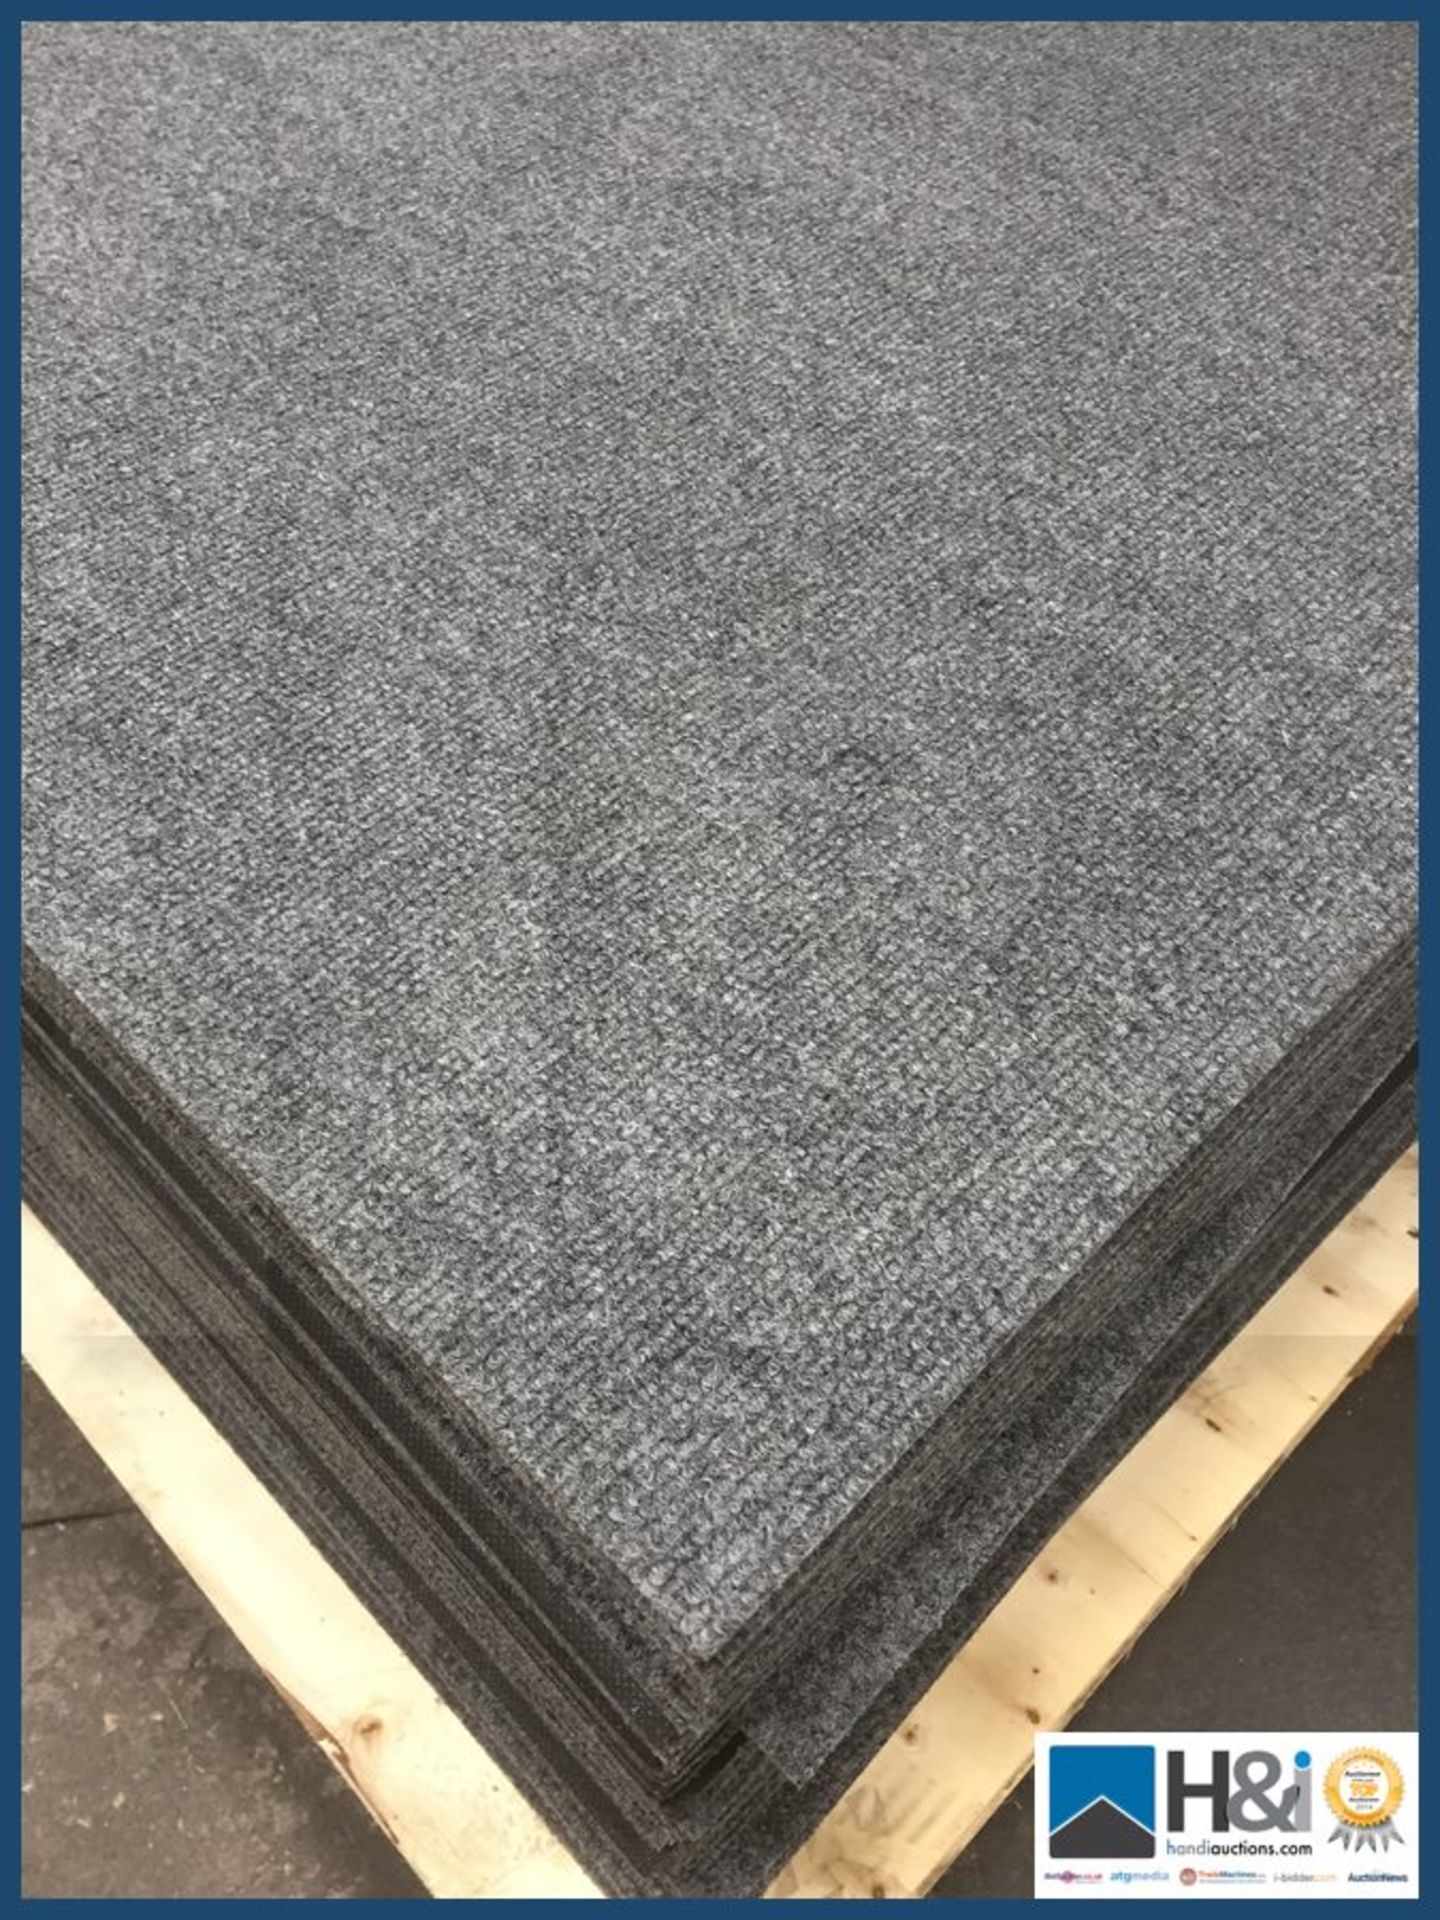 Burmatex contract carpet tiles. Design:Cordiale. Colour:Canadian Diamond. 80 tiles total 20m2 per lo - Image 2 of 3